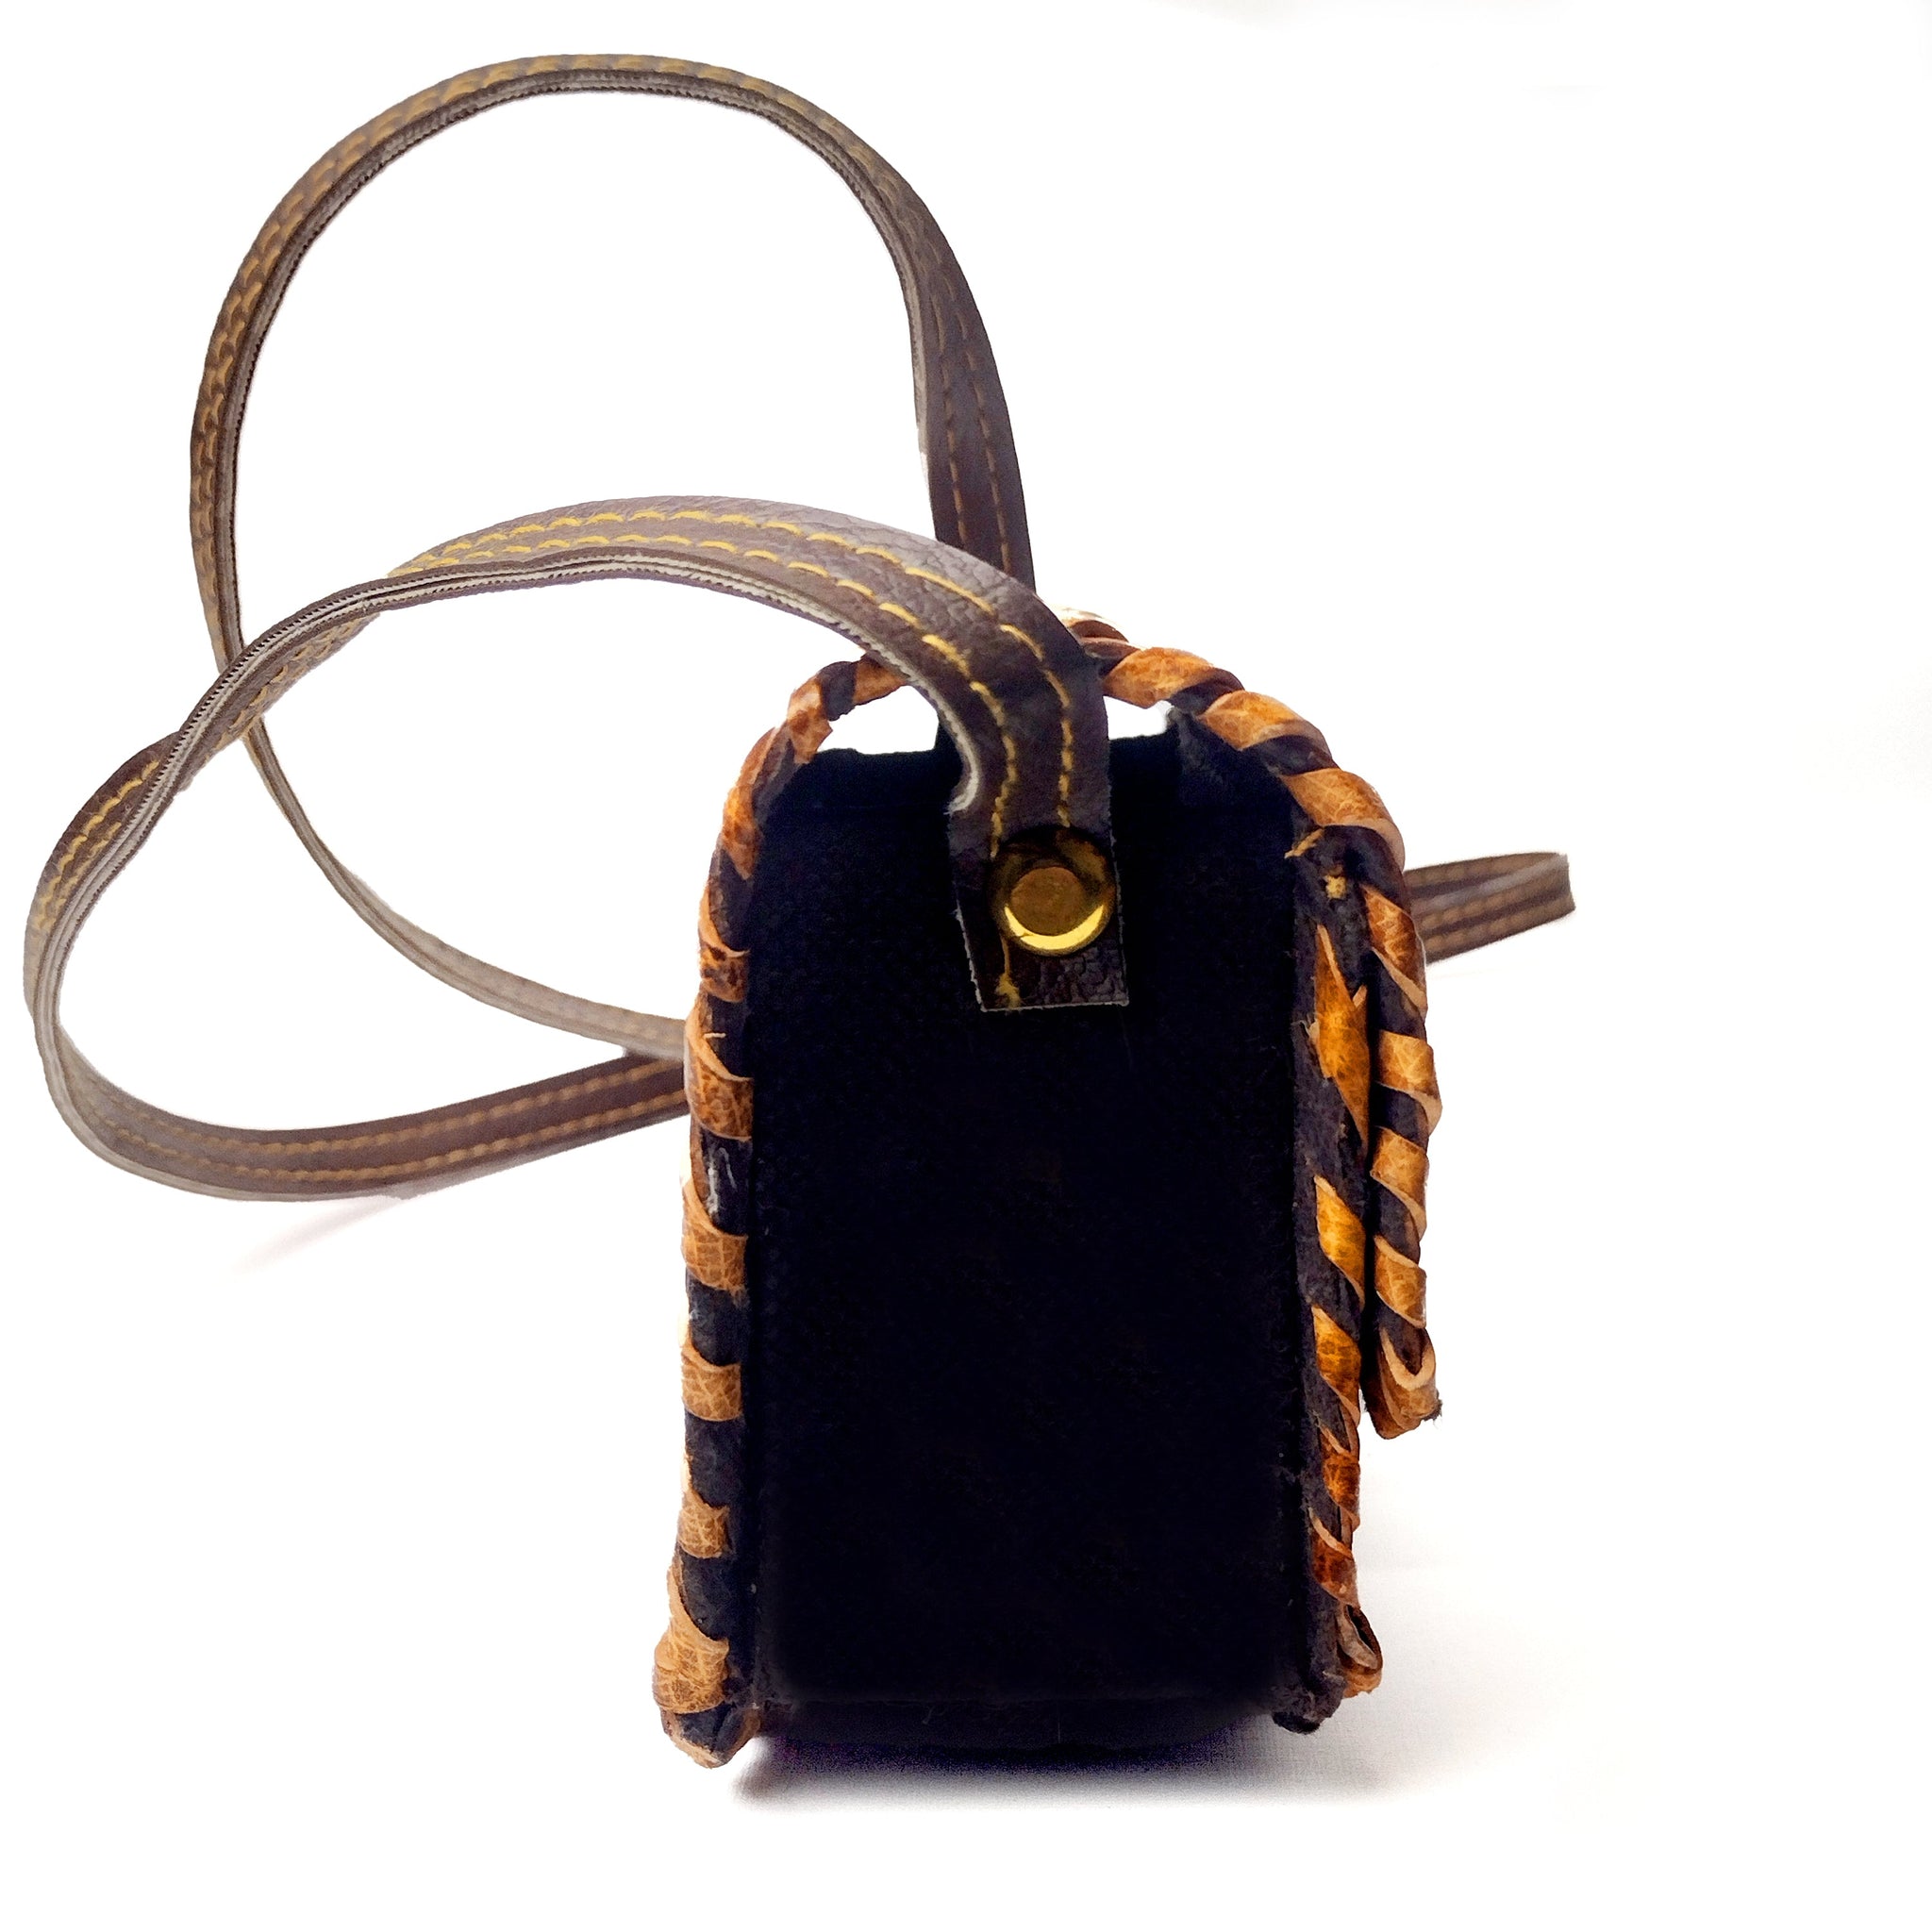 43 Amazing Granny Square Crochet Bag Design Ideas | Crochet purse patterns,  Crochet handbags patterns, Crochet bag pattern